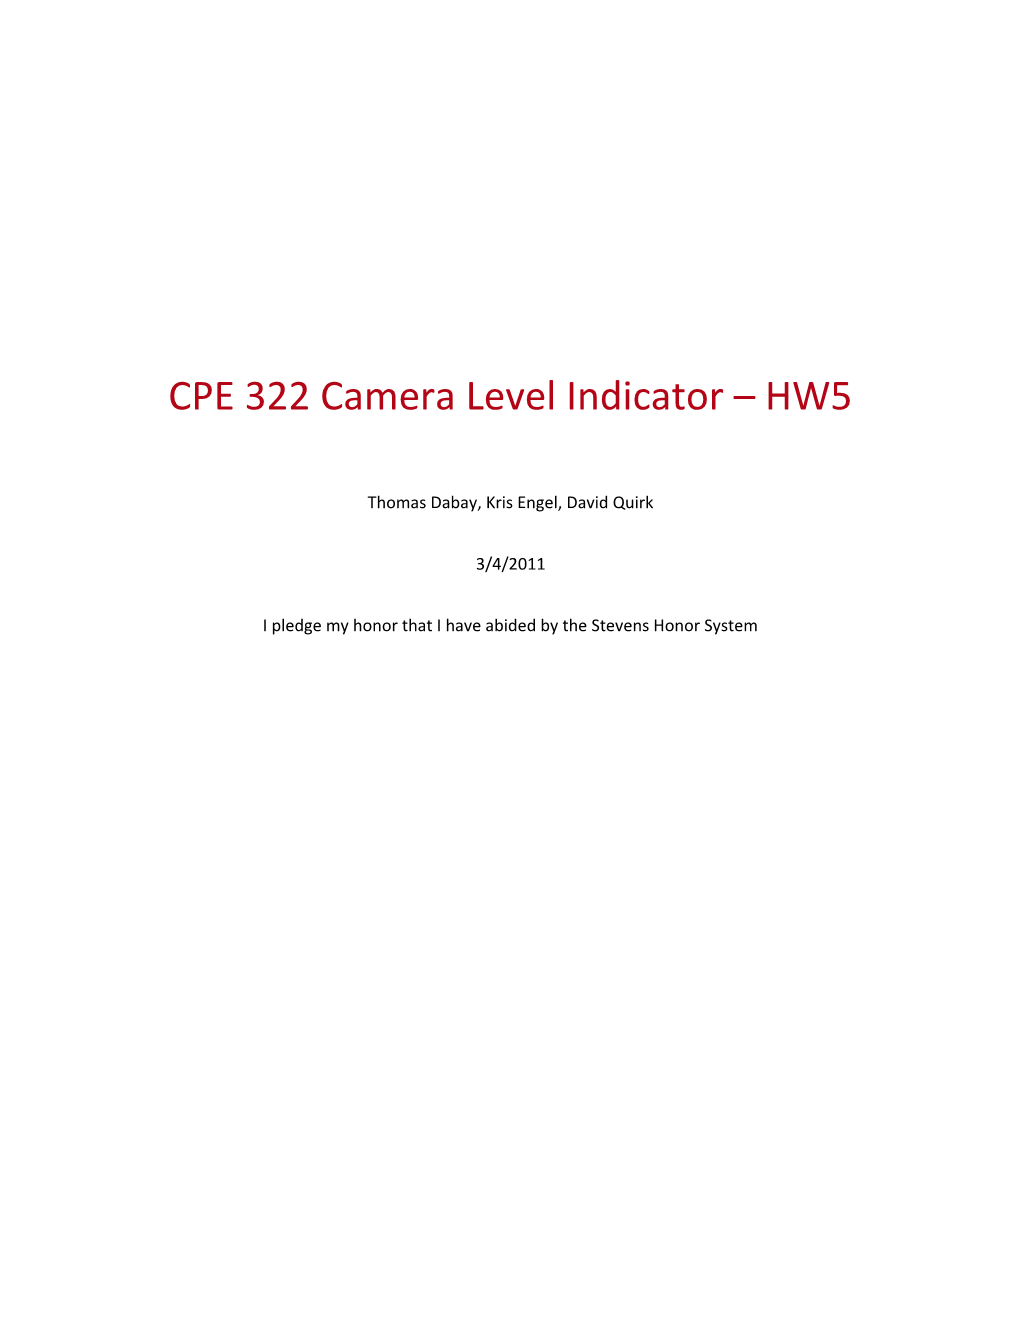 CPE 322 Camera Level Indicator HW5